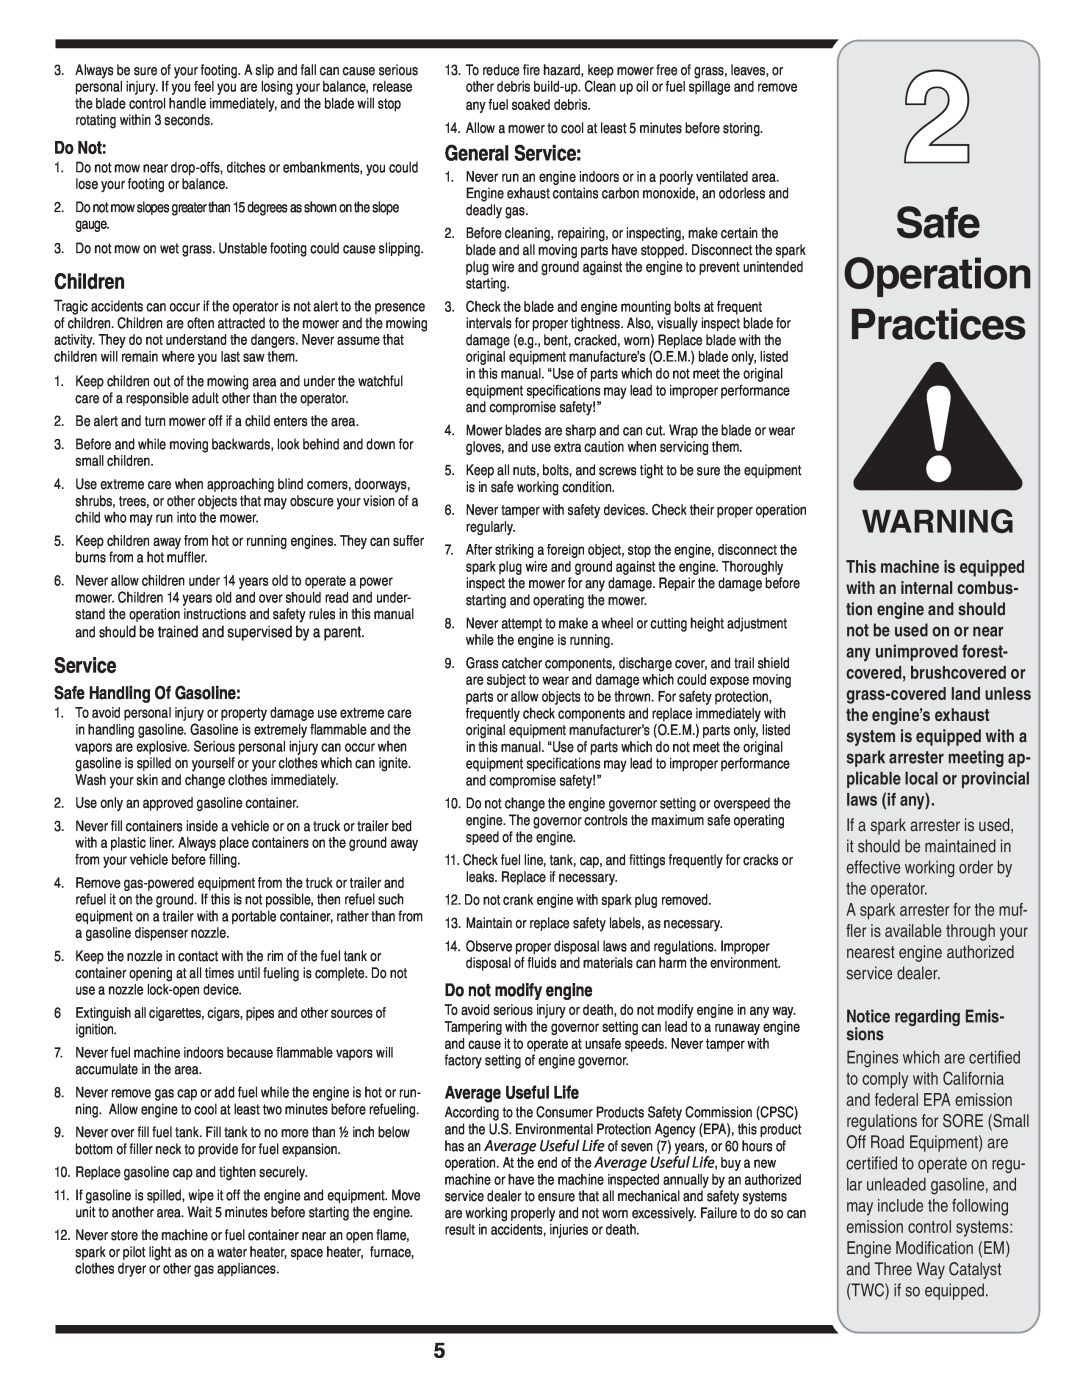 MTD 60-1620-4 Safe Operation Practices, Do Not, Safe Handling Of Gasoline, Do not modify engine, Average Useful Life 